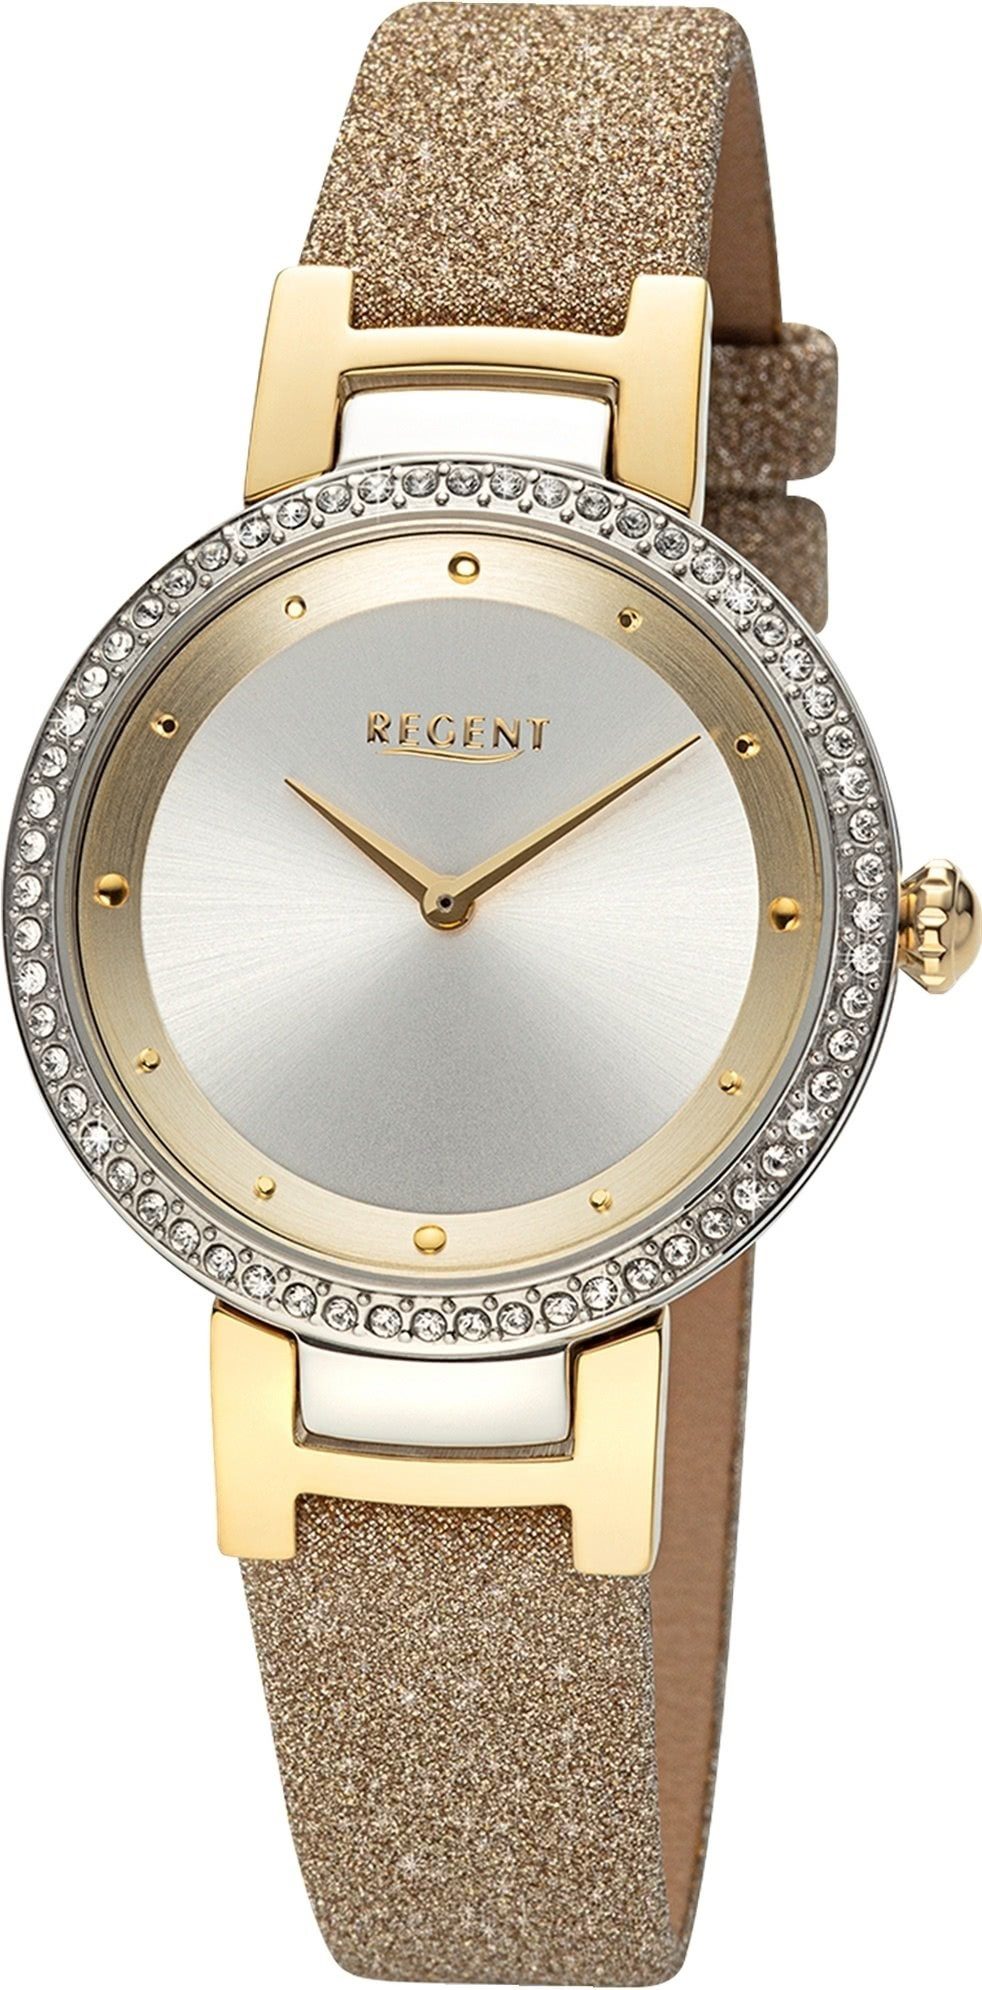 Regent Quarzuhr Regent Damen Armbanduhr Analog, Damen Armbanduhr rund, extra groß (ca. 33mm), Lederarmband